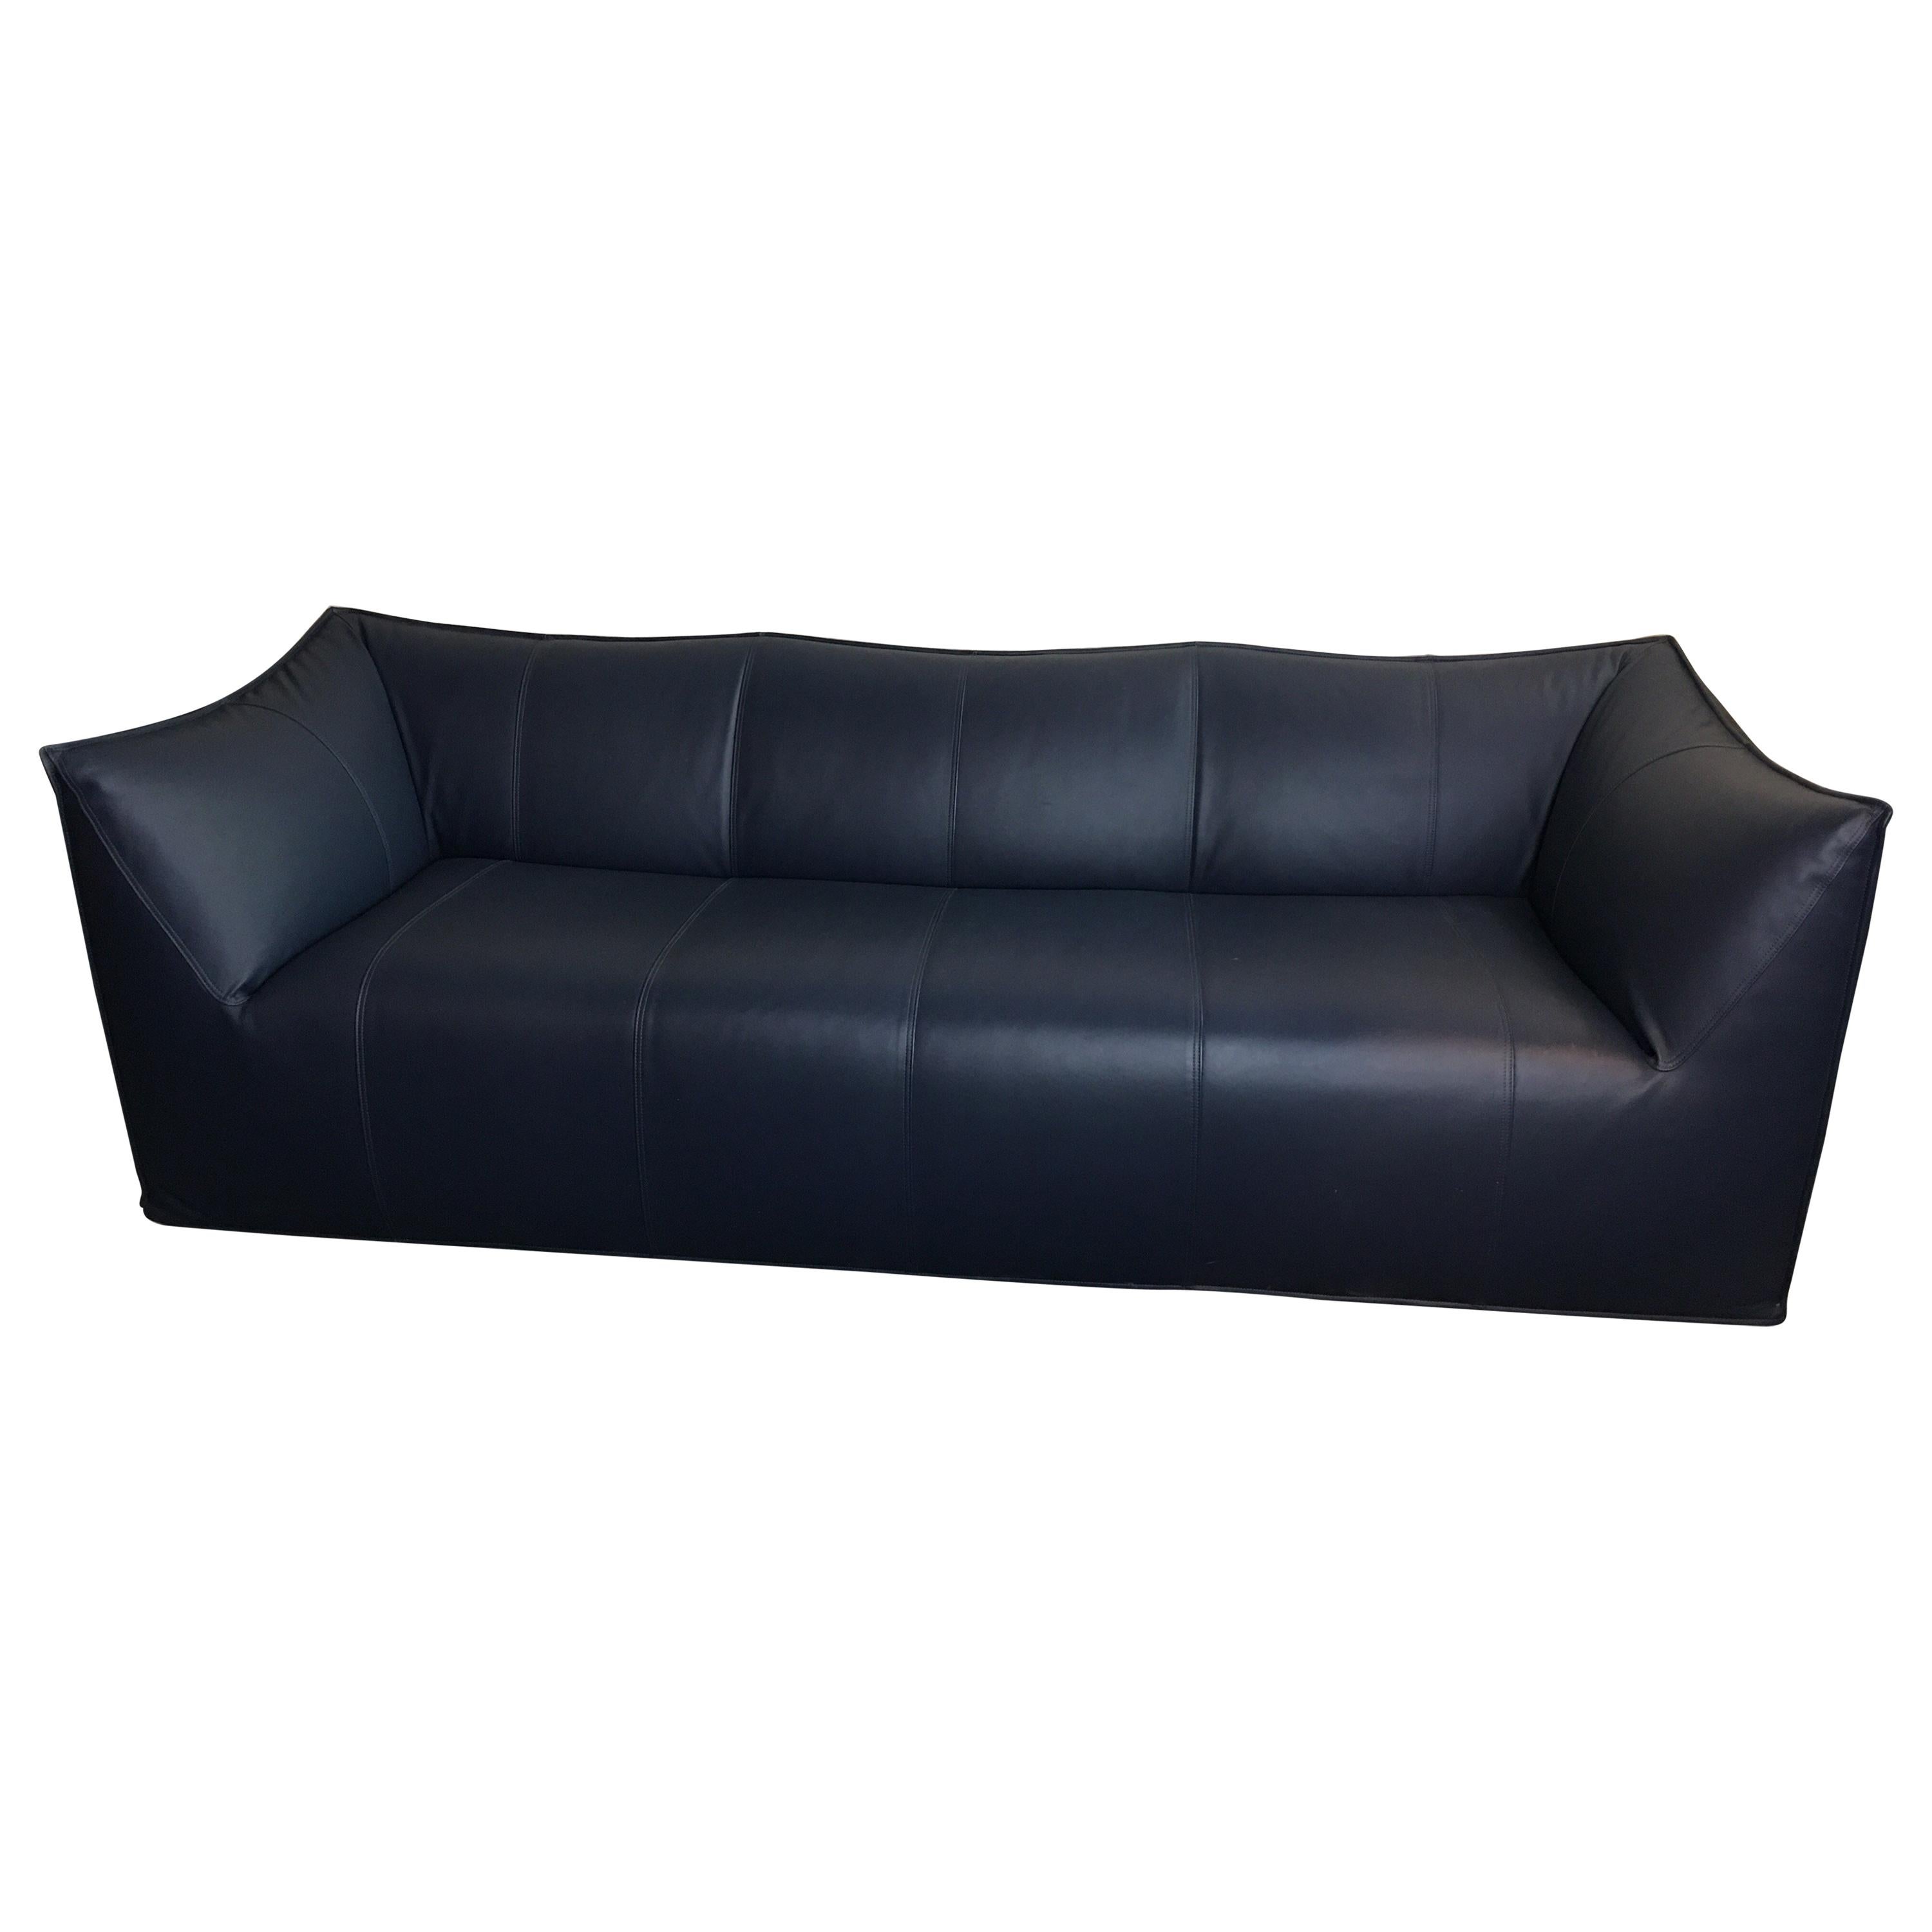 Mario Bellini Le Bambole 3-Seat Sofa in dark Blue Leather